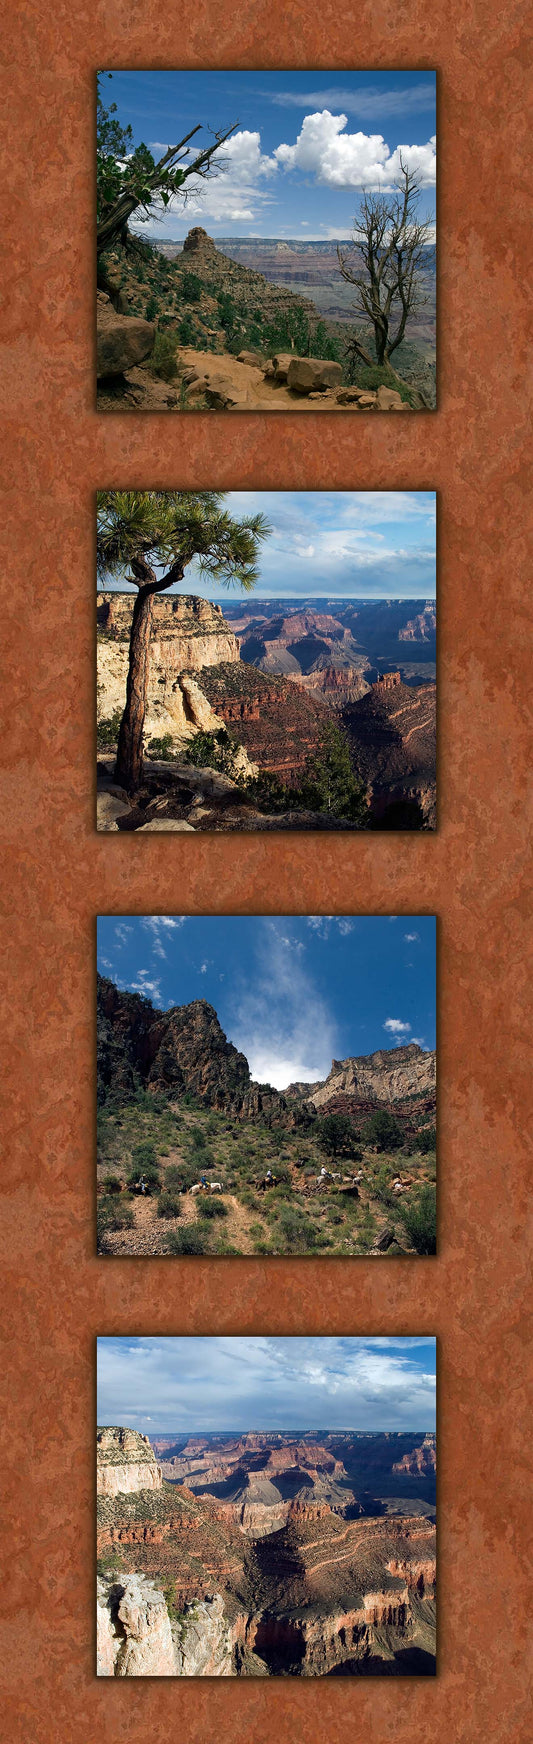 Grand Canyon National Park Fabric Panel - NPGC-004